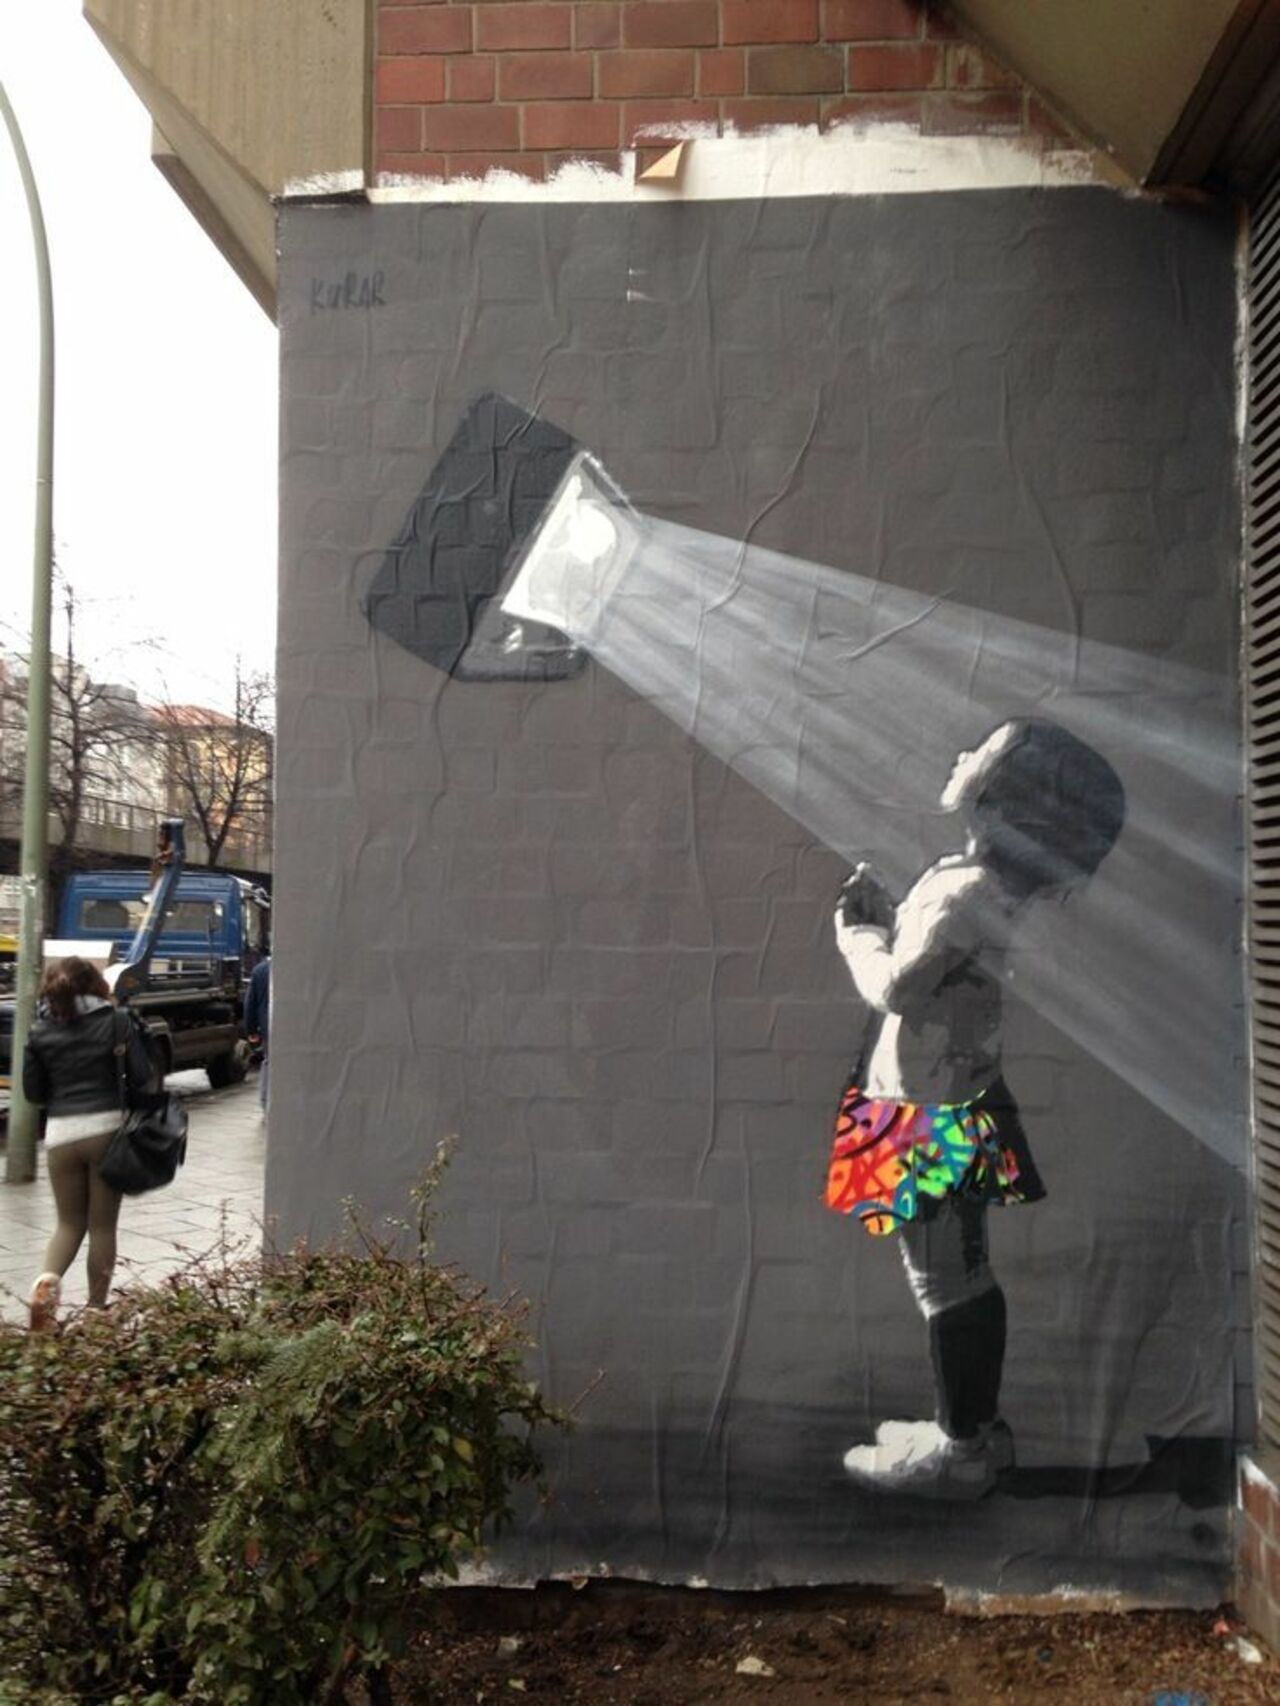 "And the light is" Berlin, Germany by Kurar#streetart #mural #graffiti #art https://t.co/NKXmdKL7vn